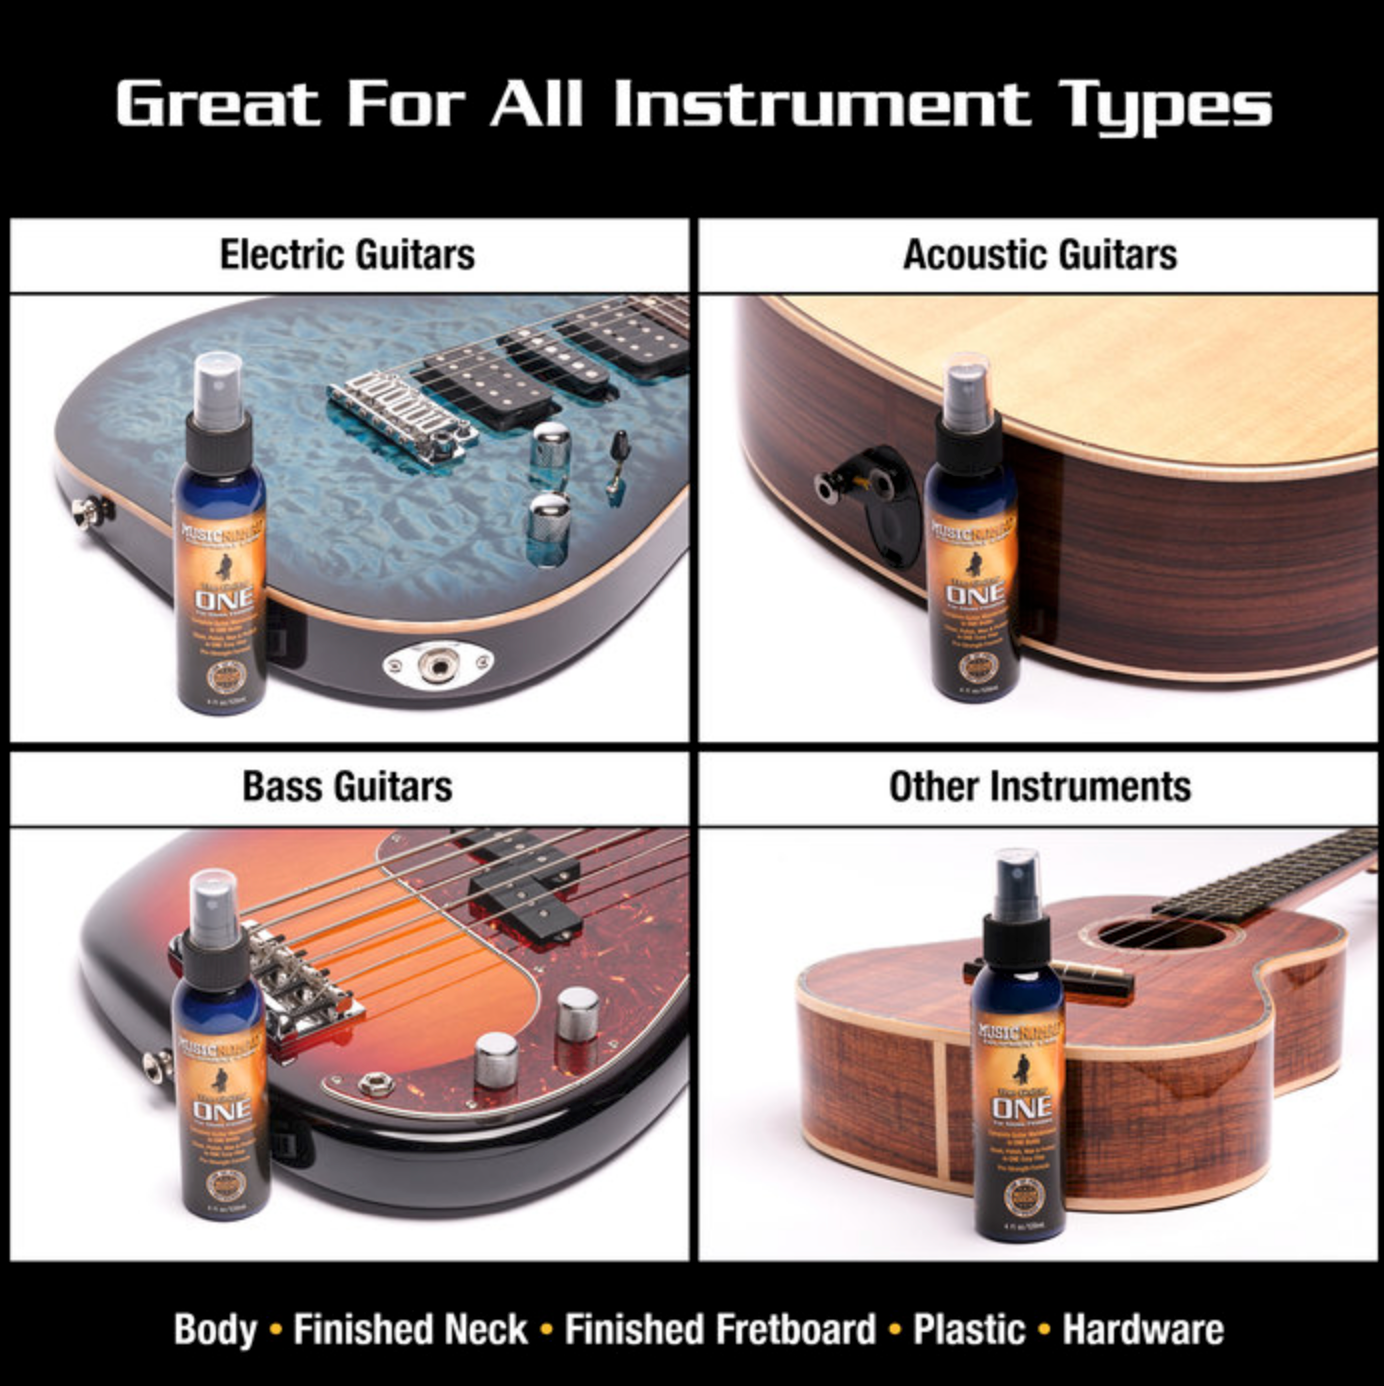 Music Nomad Premium Guitar Care Kit - 5 pc S/N:MN108